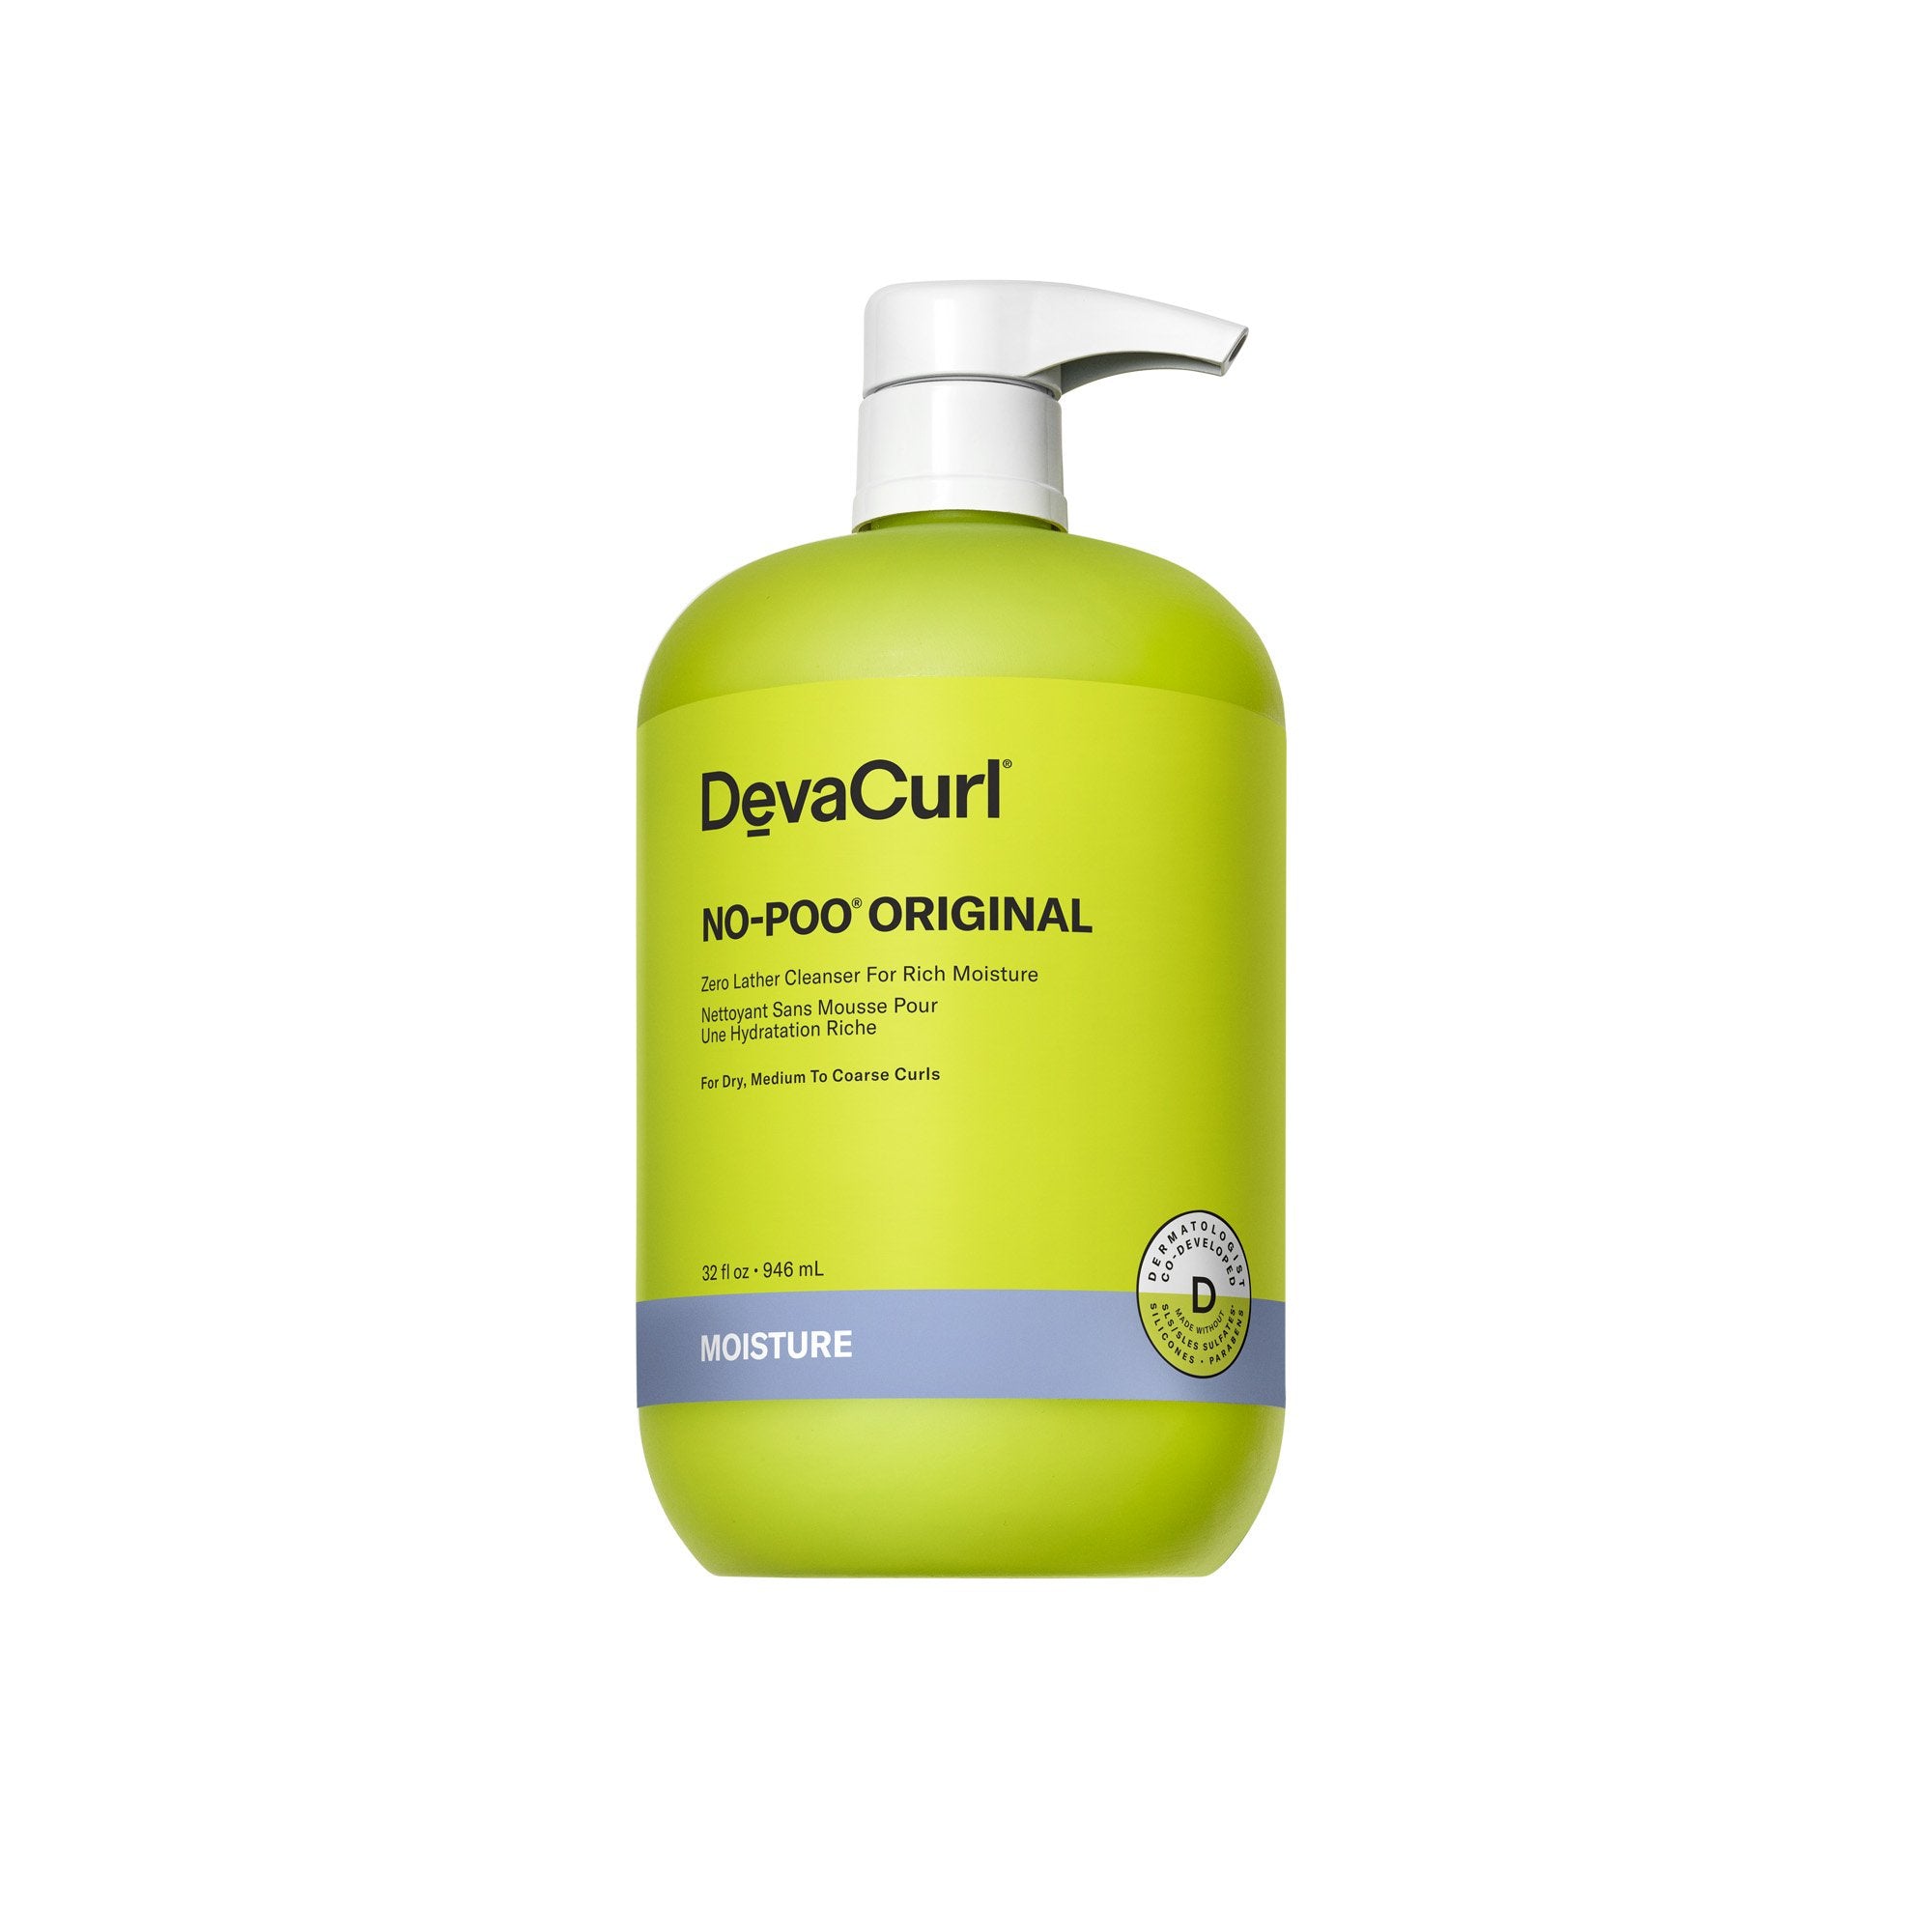 New! DevaCurl No-Poo Original-ellënoire body, bath fragrance & curly hair